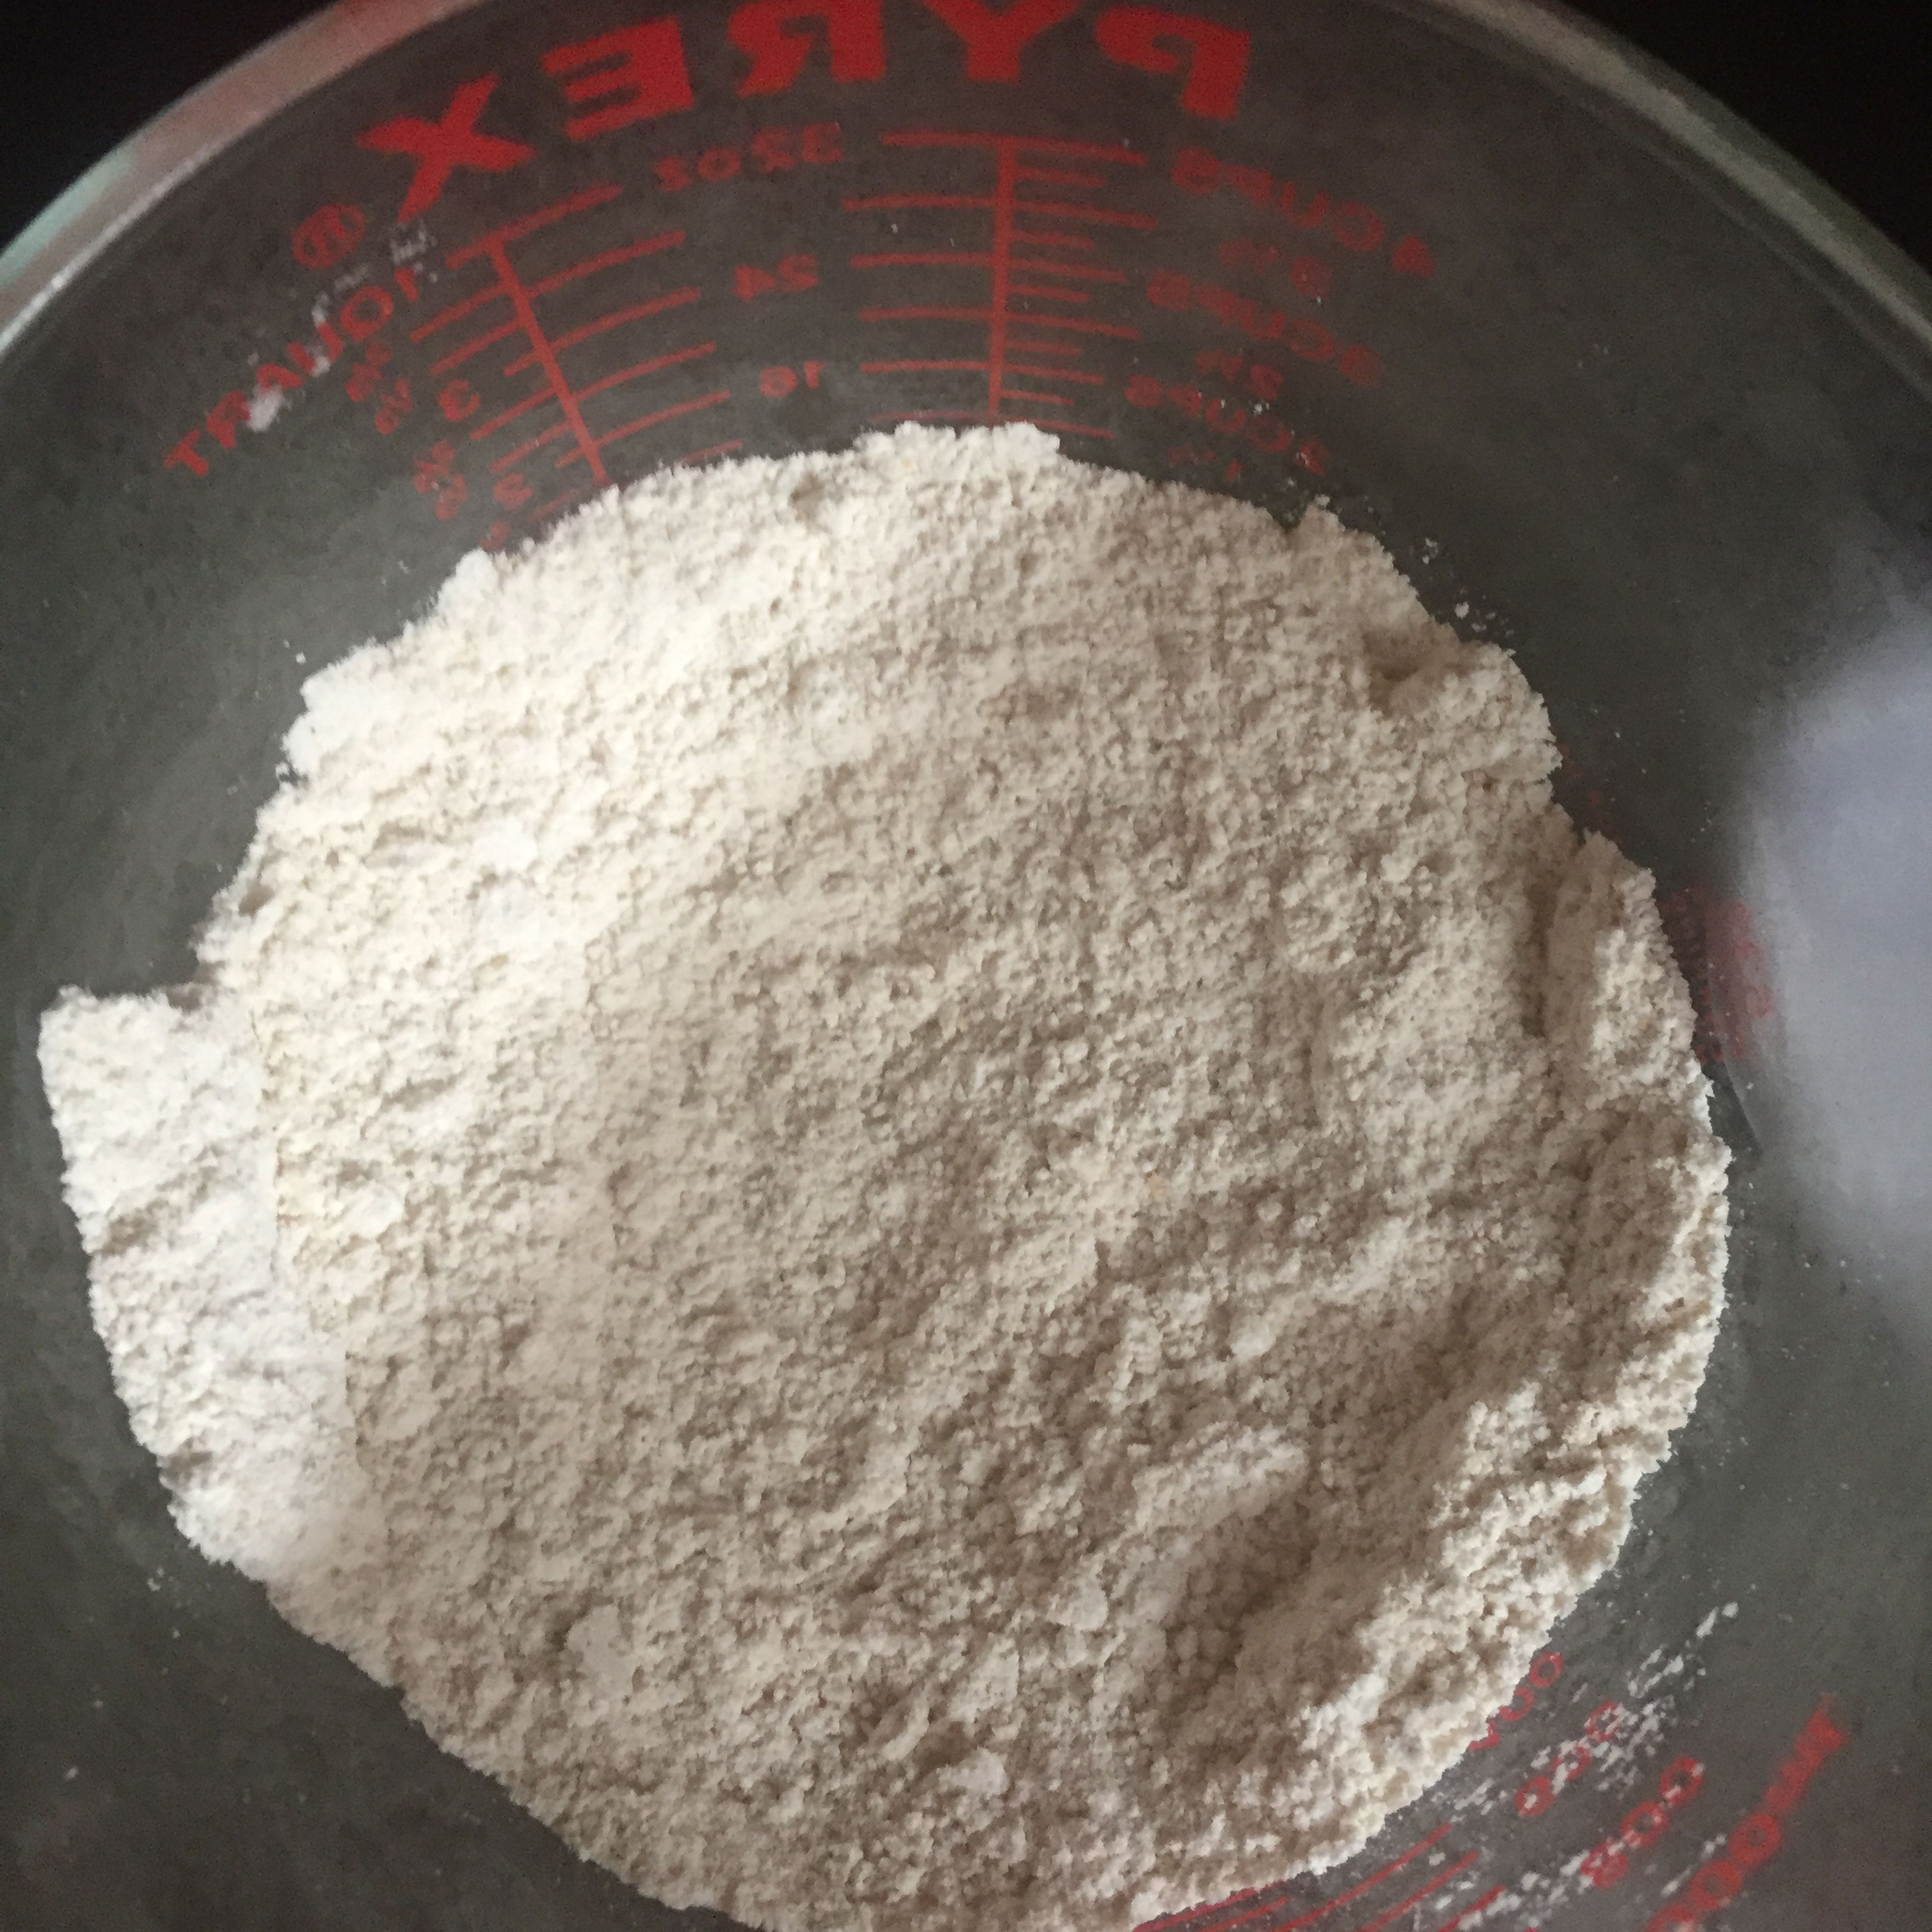 Mix together whole wheat flour,baking powder,vanila and salt